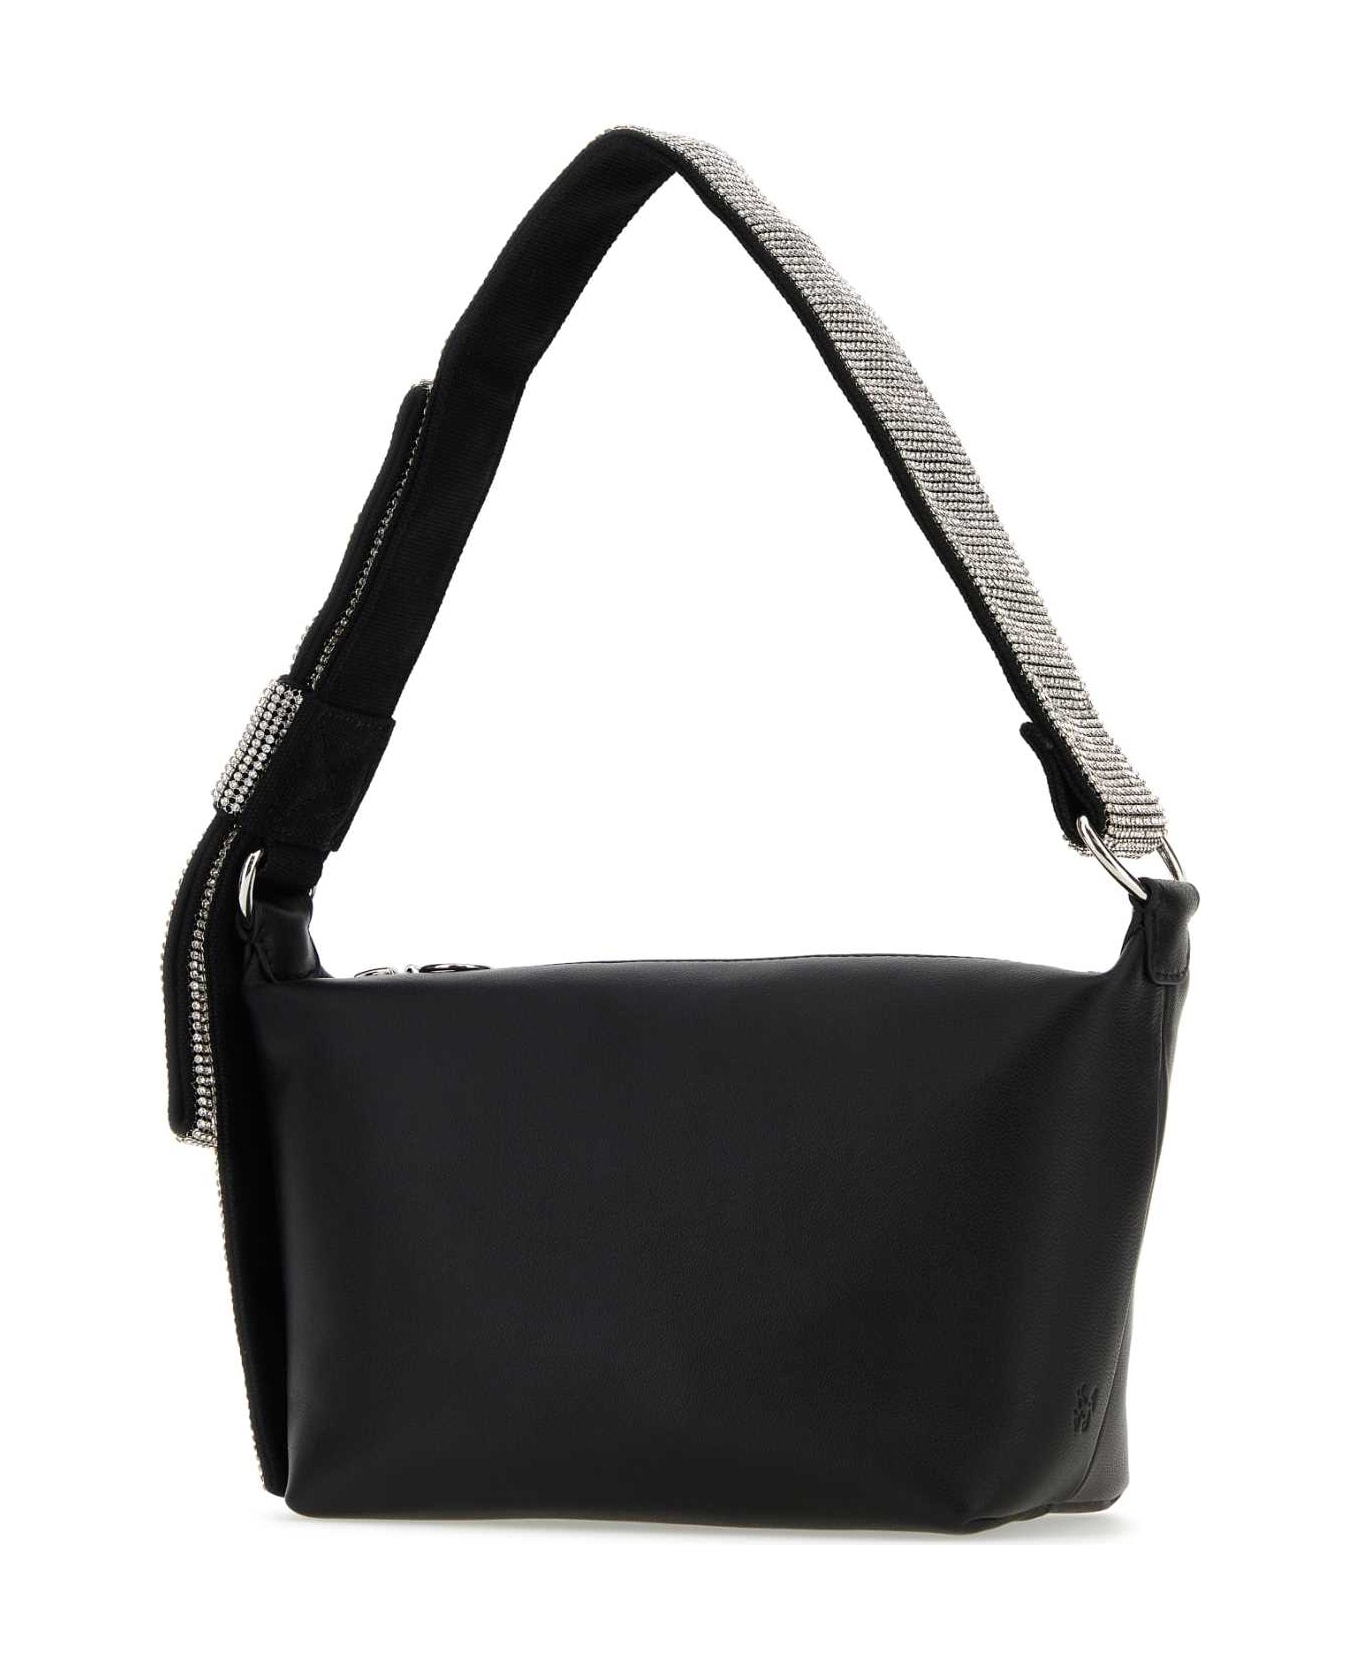 Kara Black Nappa Leather Shoulder Bag - BLACKWHITE